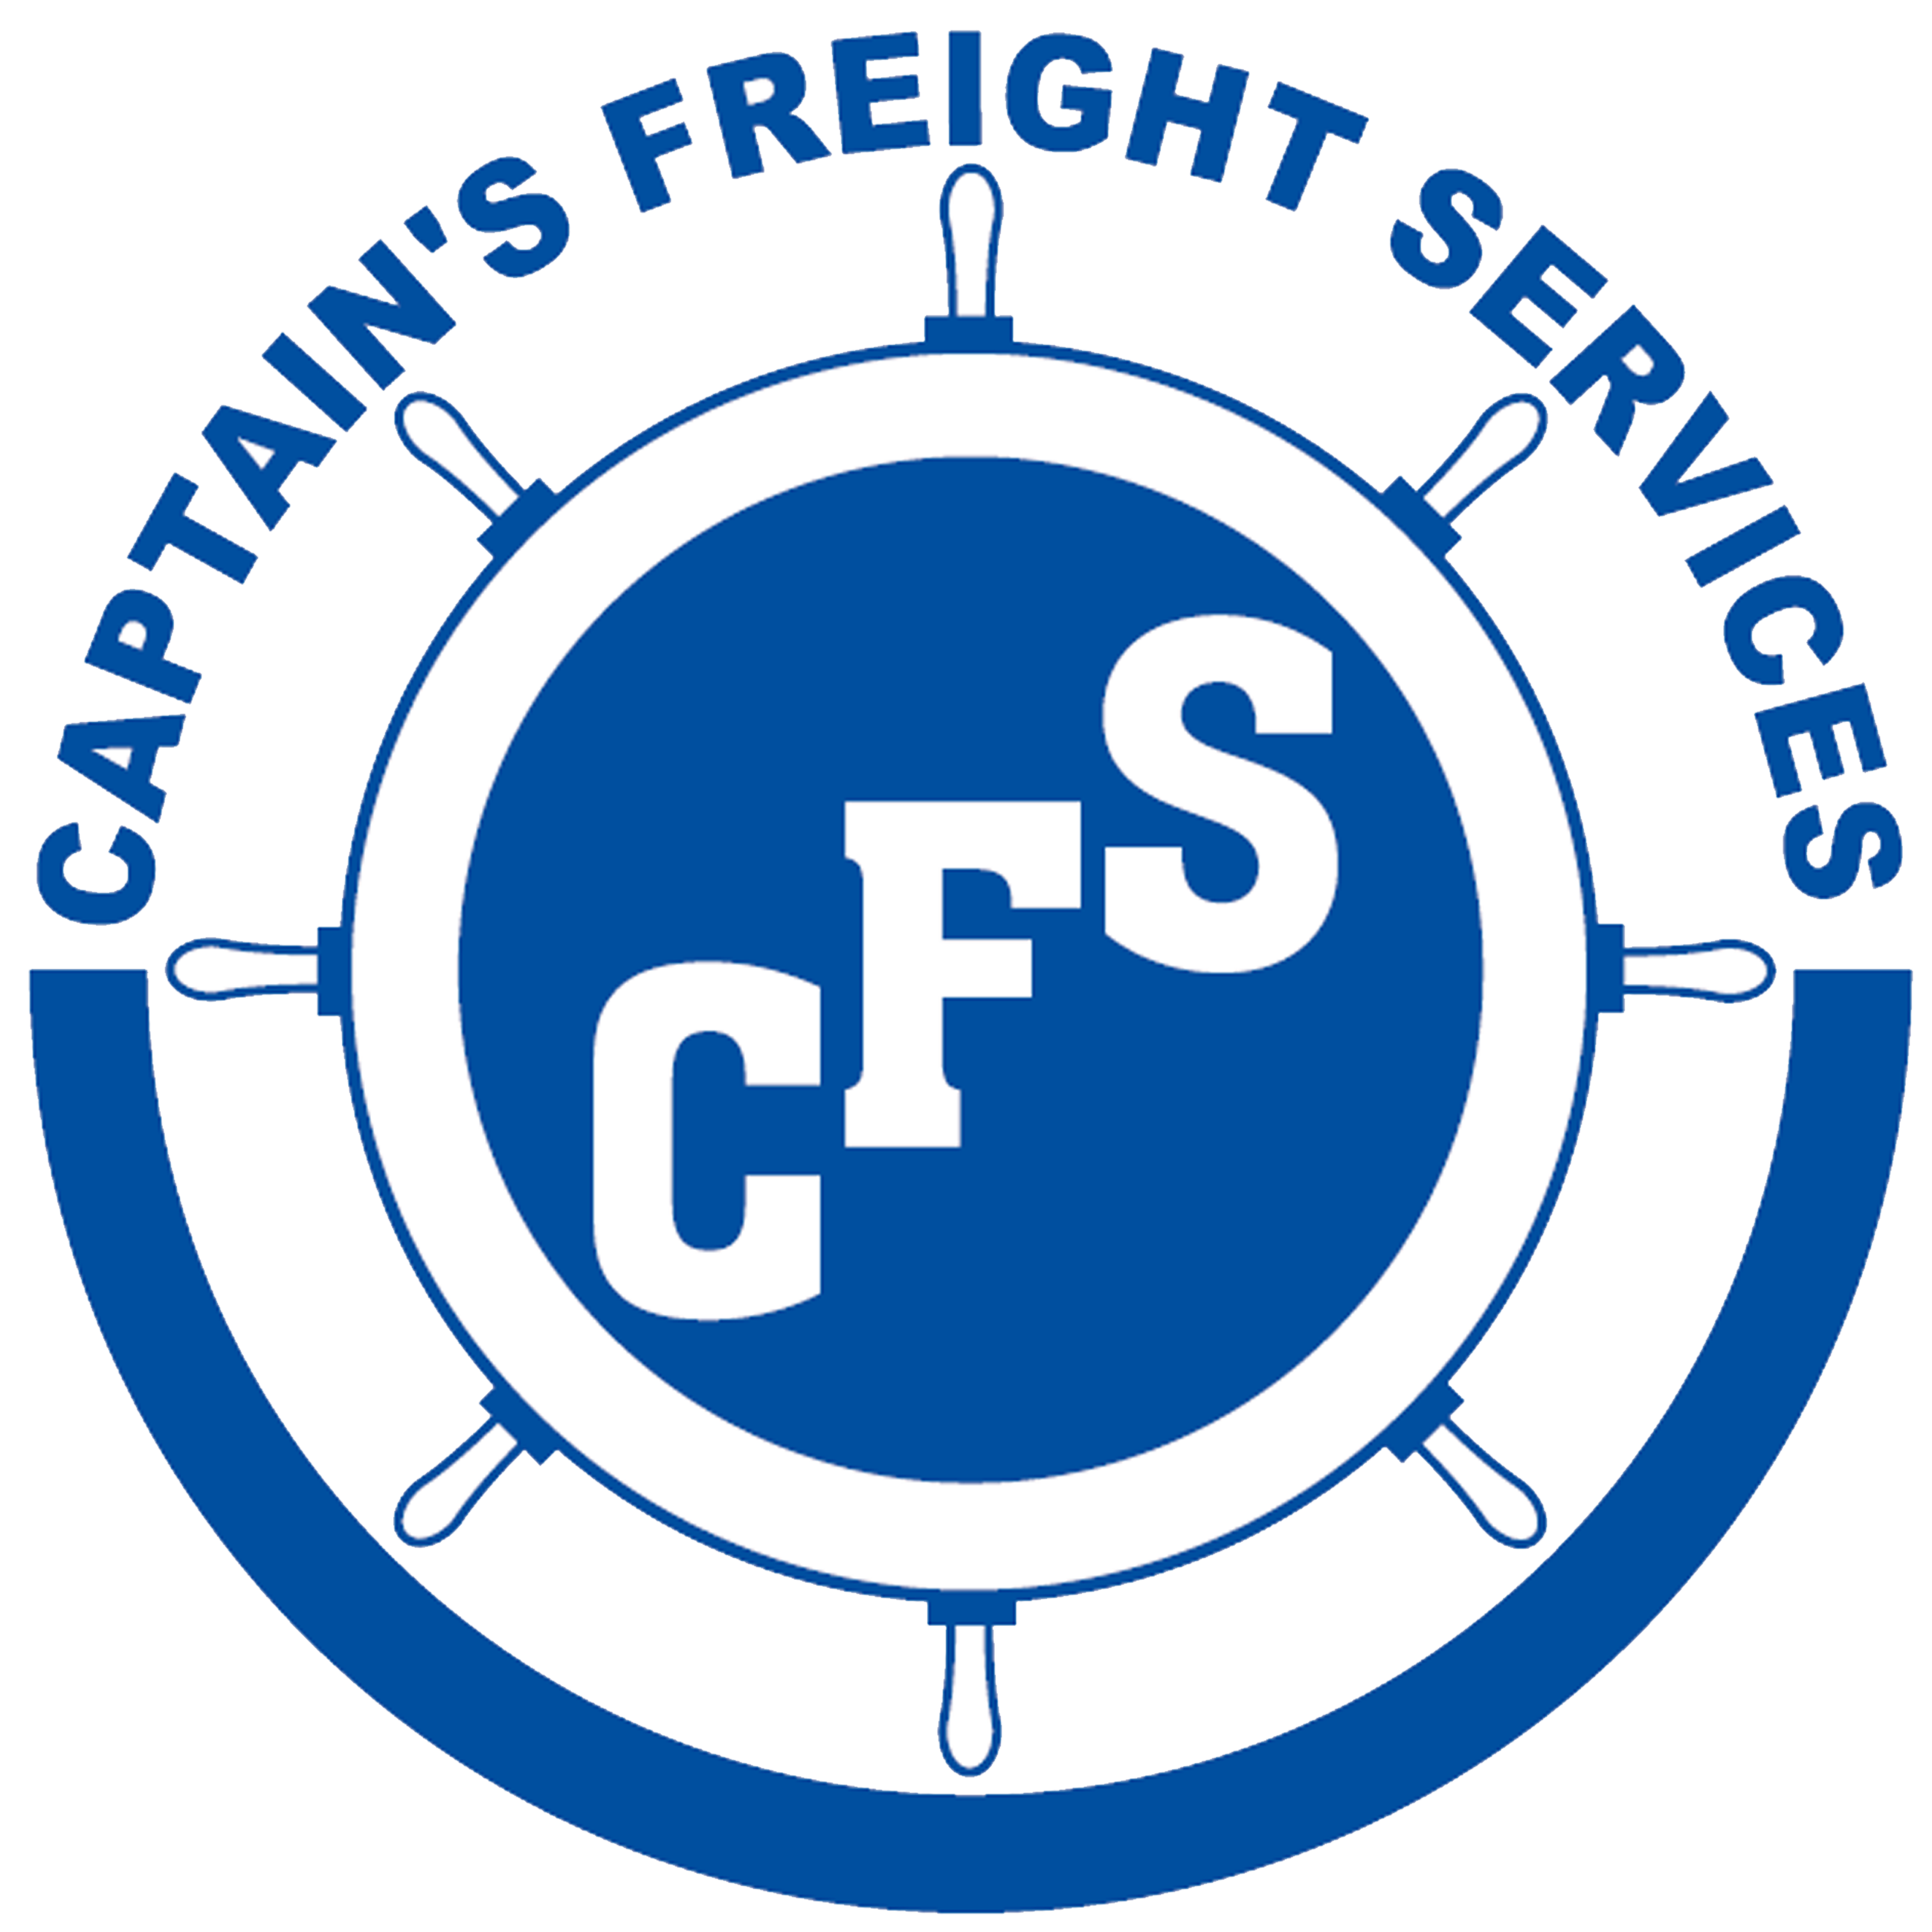 Captain's Freight Services Dubai